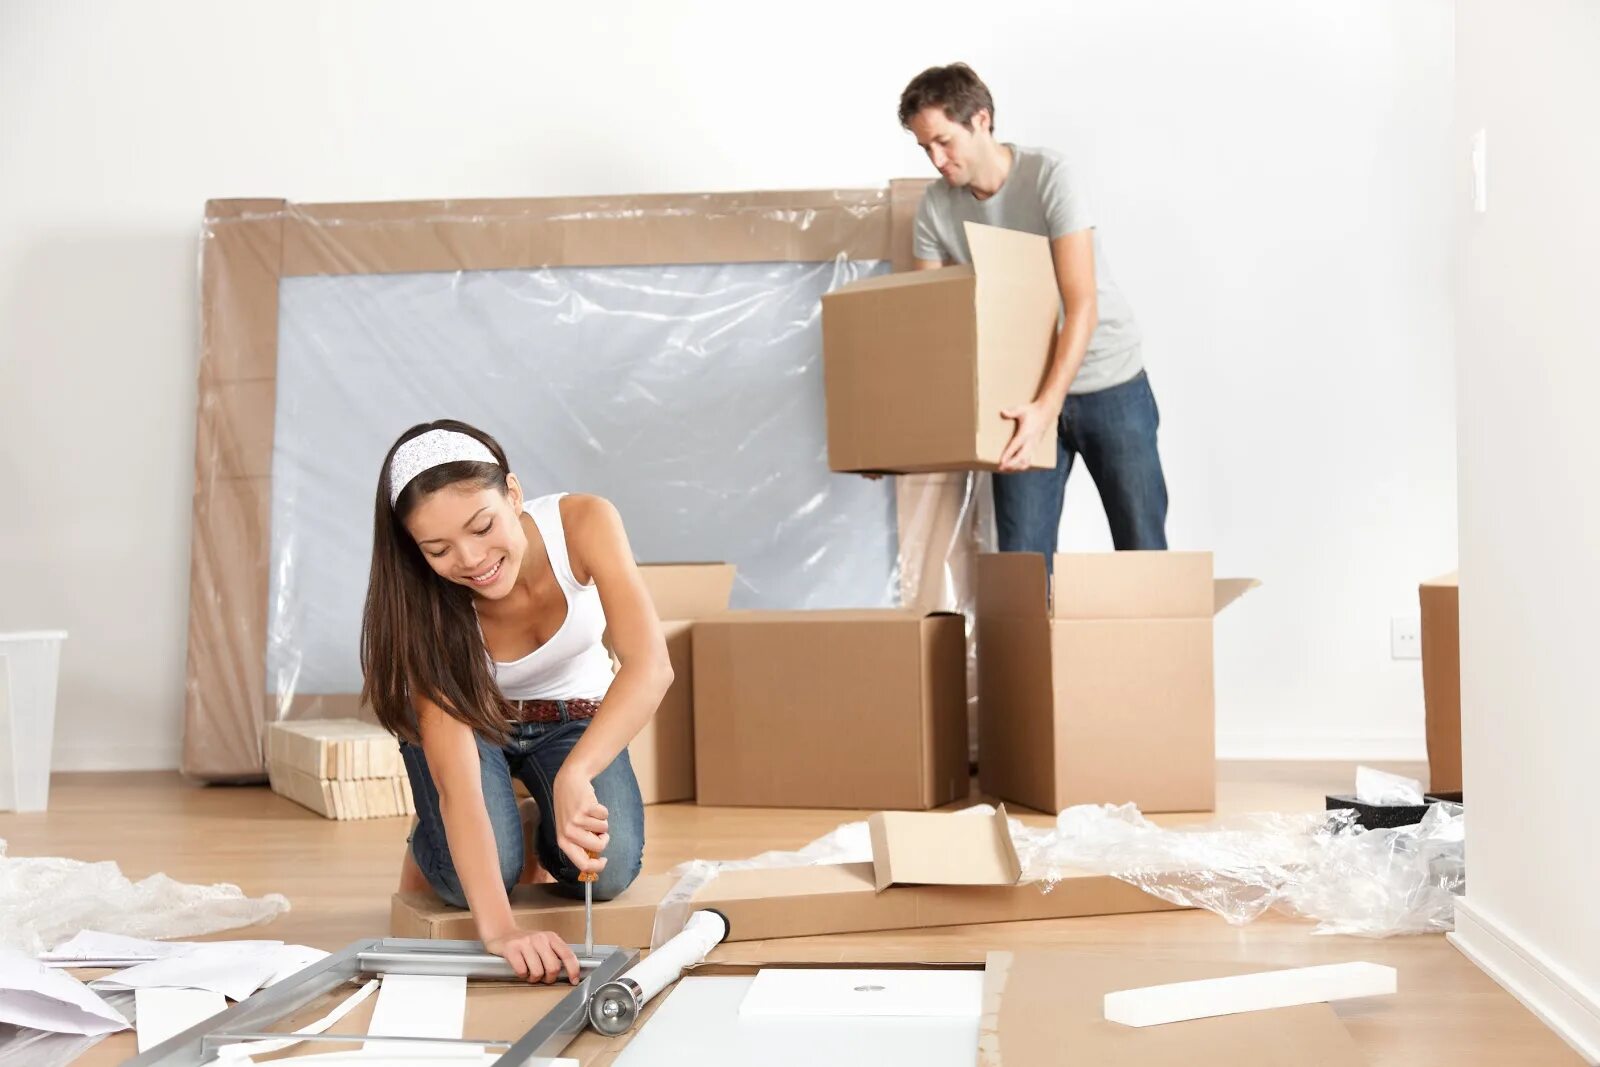 Do you a new home. Переезжают в квартиру. Новая квартира коробки. Коробки в квартире. Квартирный переезд.